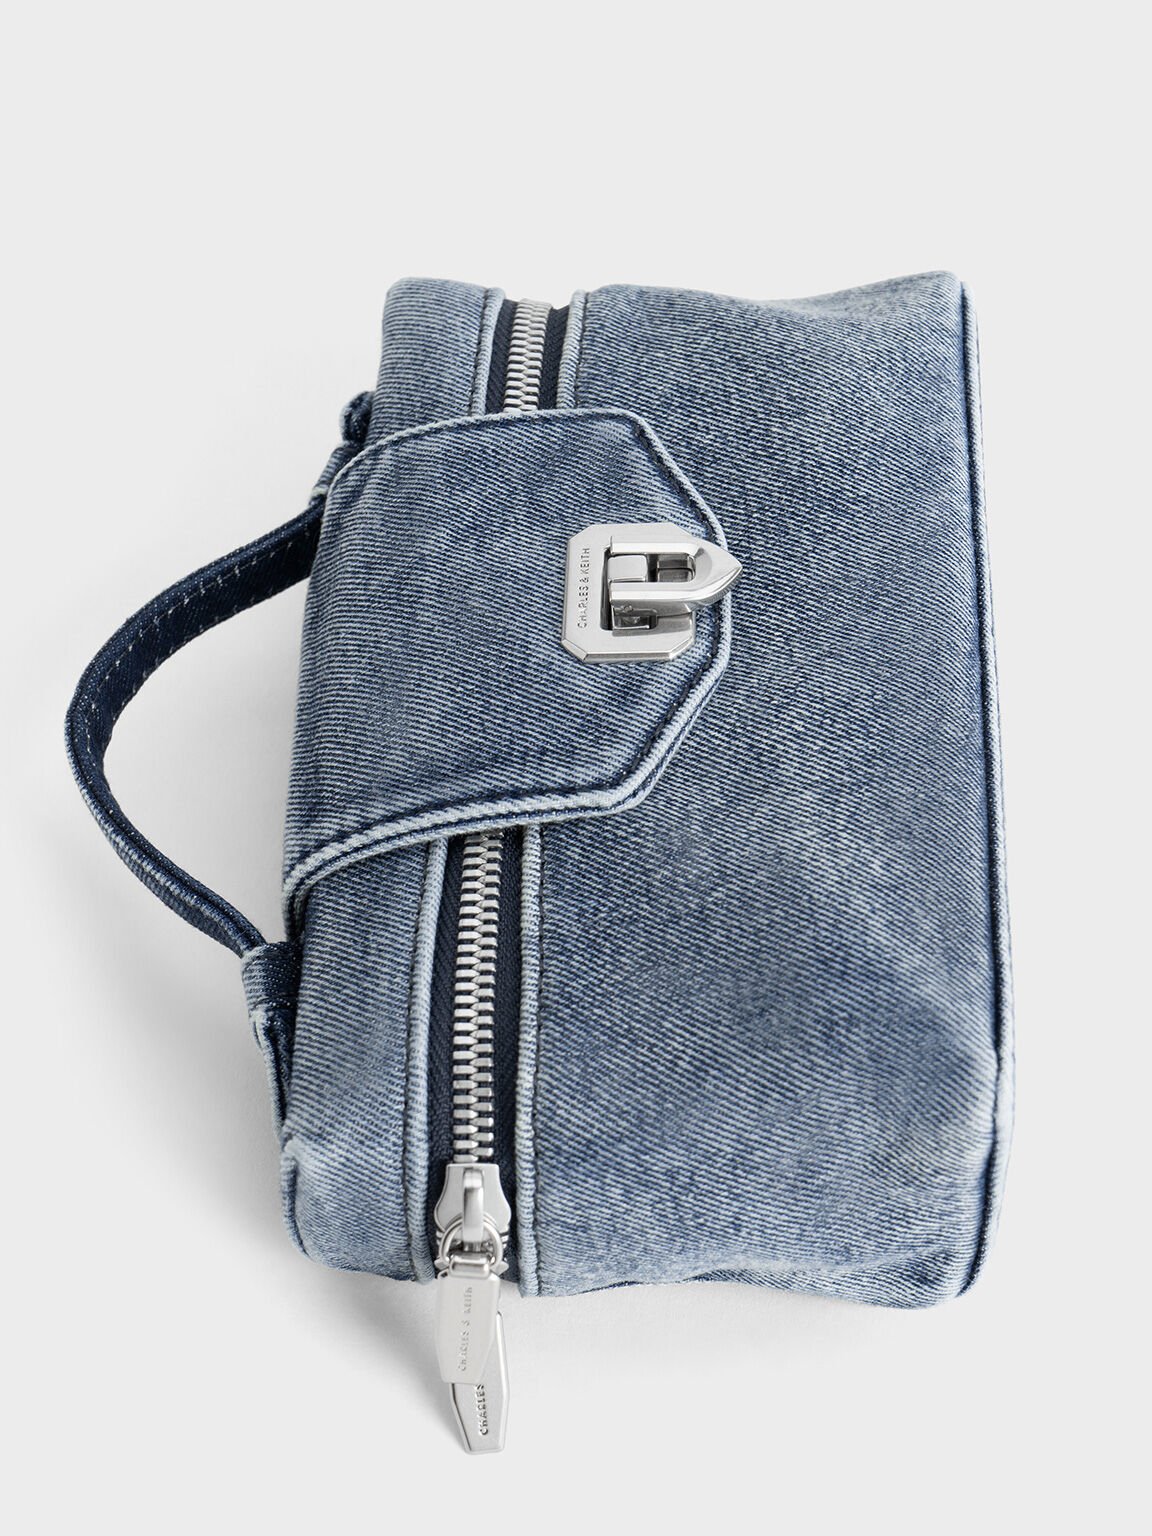 Arwen Denim Top Handle Vanity Bag, Denim Blue, hi-res